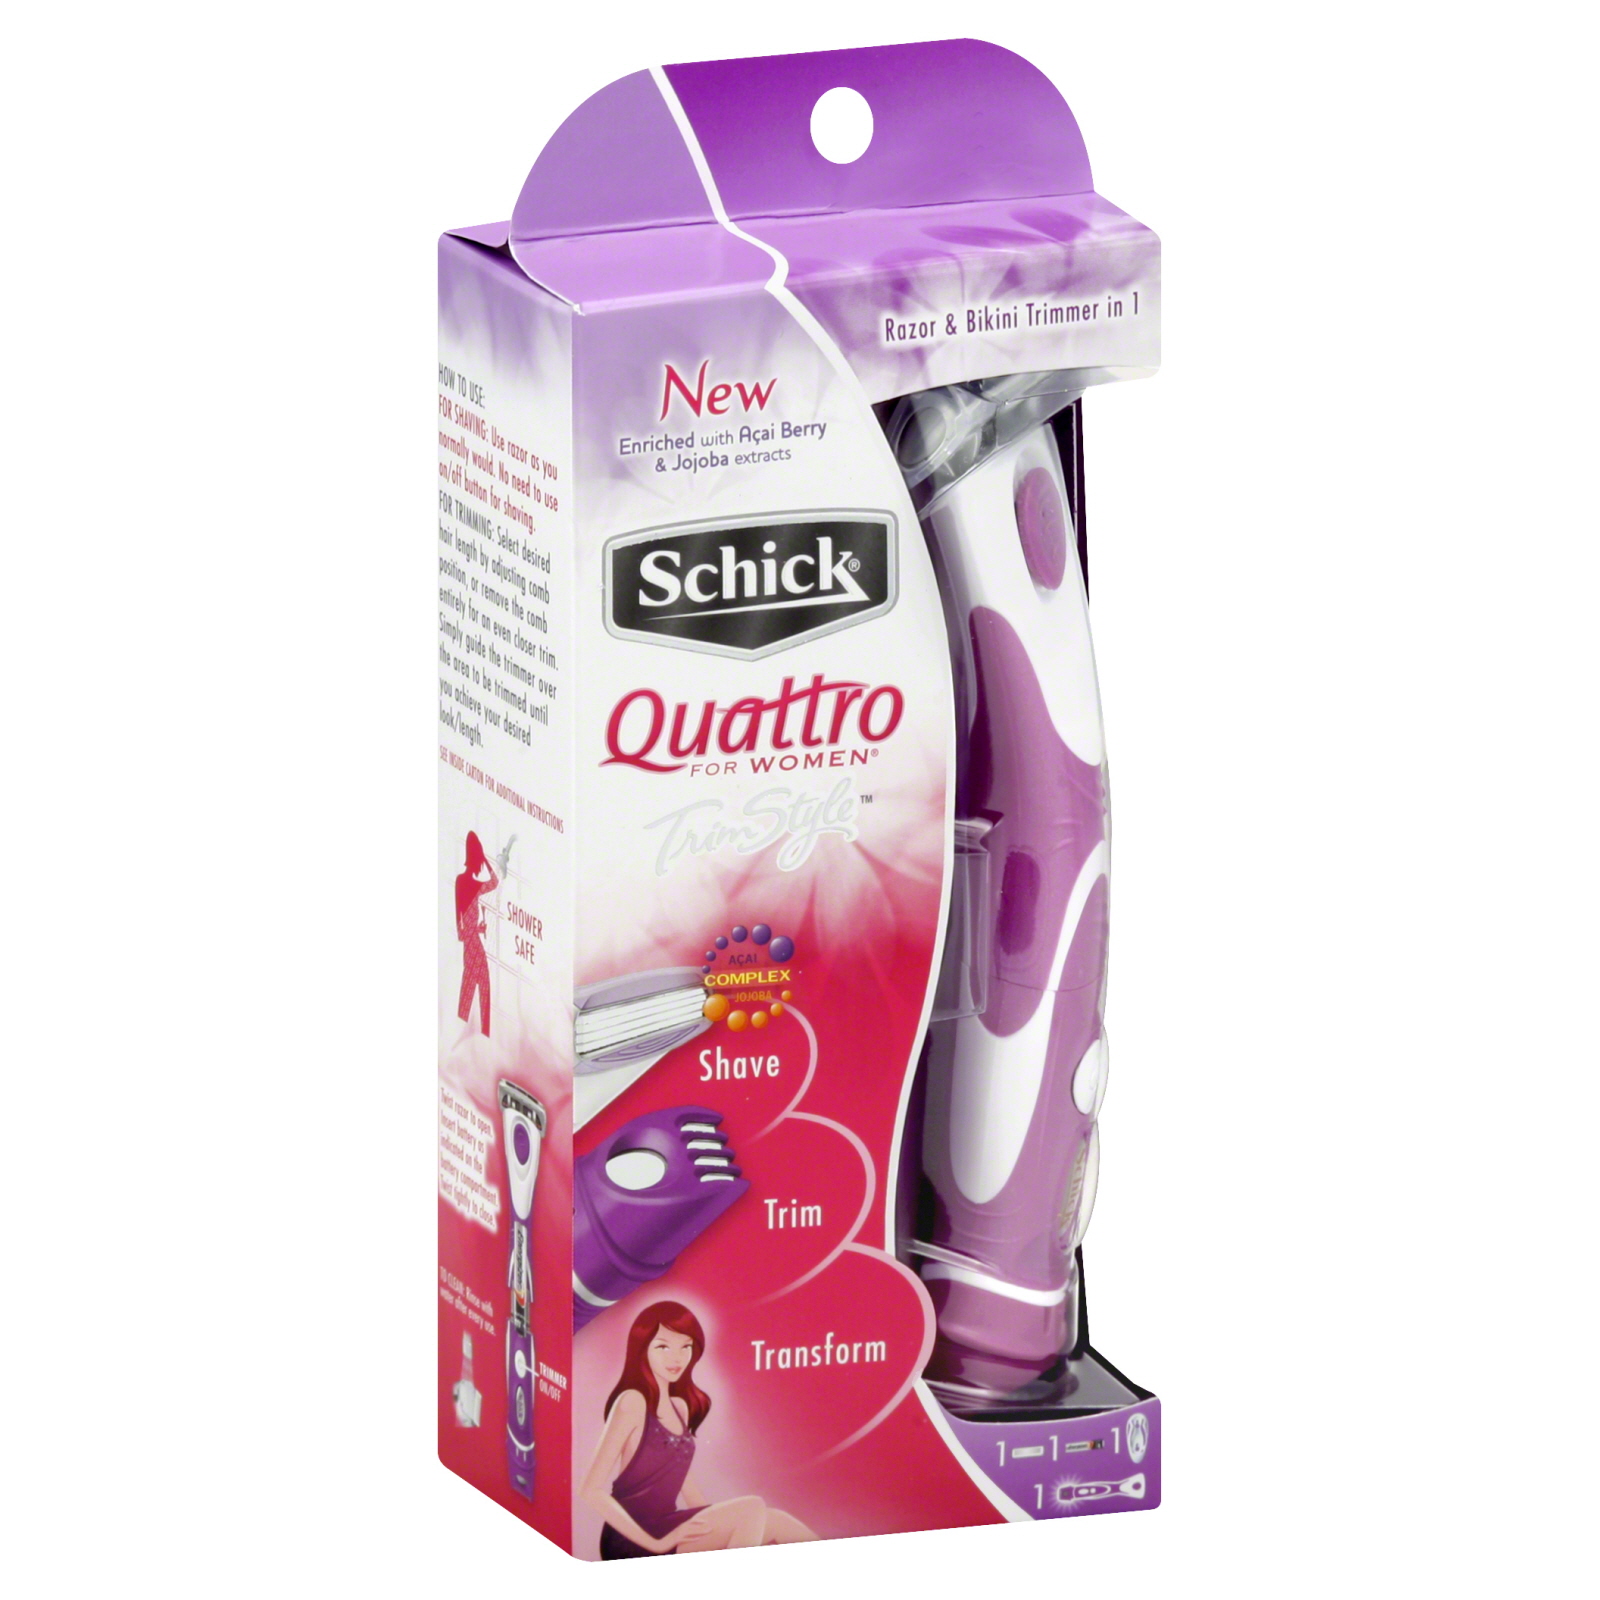 Schick Quattro For Women Razor & Bikini Trimmer, 1 razor